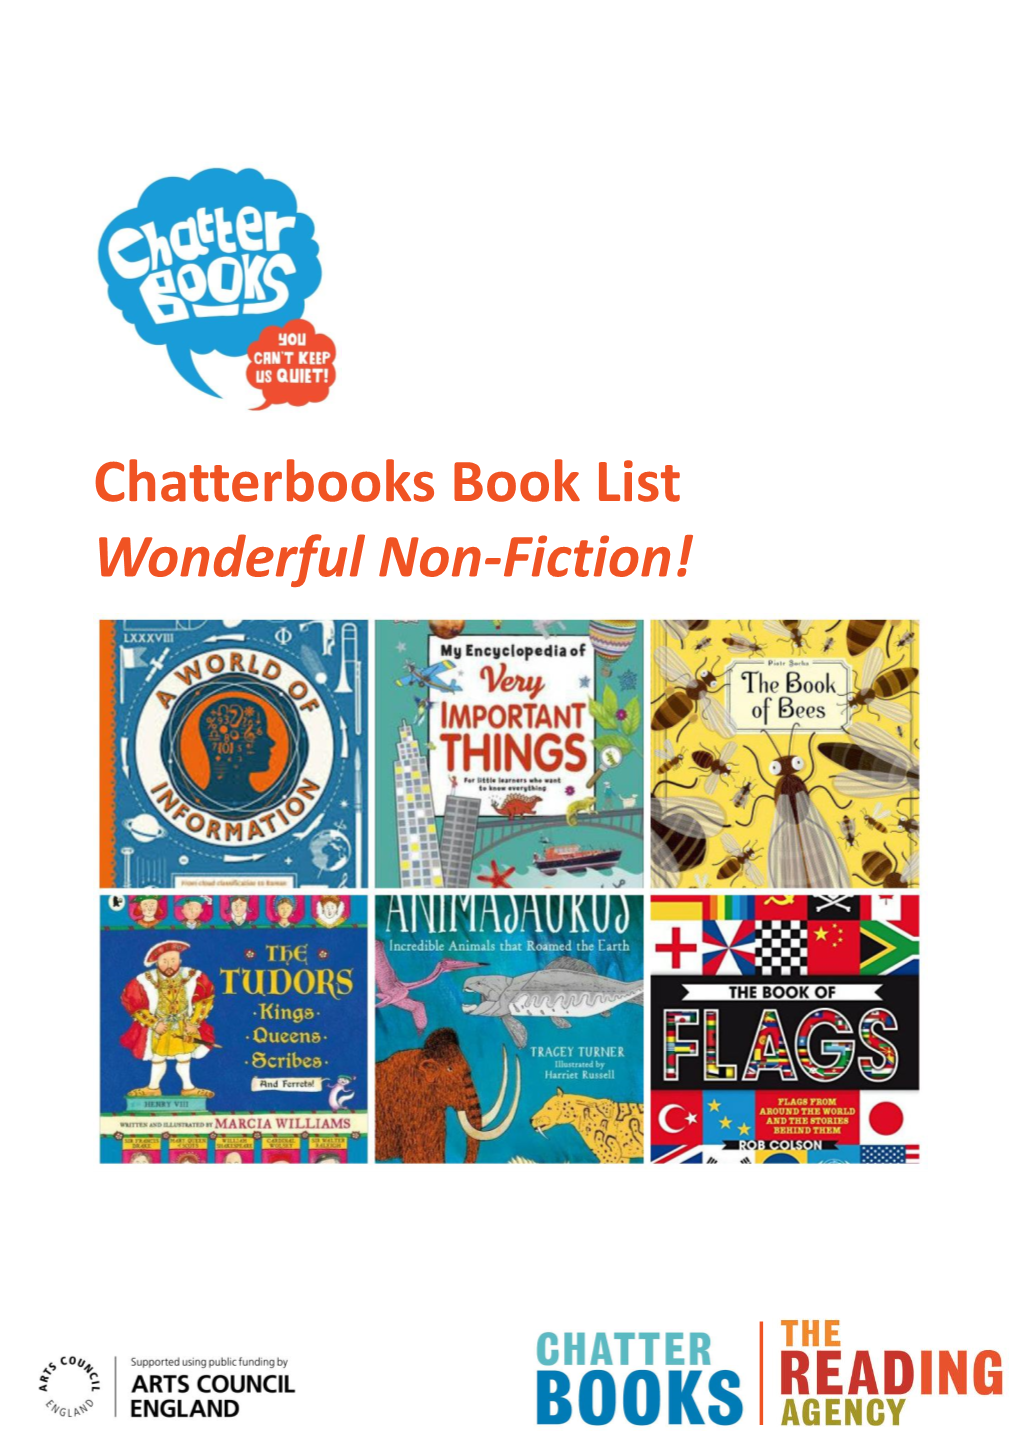 Chatterbooks Book List Wonderful Non-Fiction!